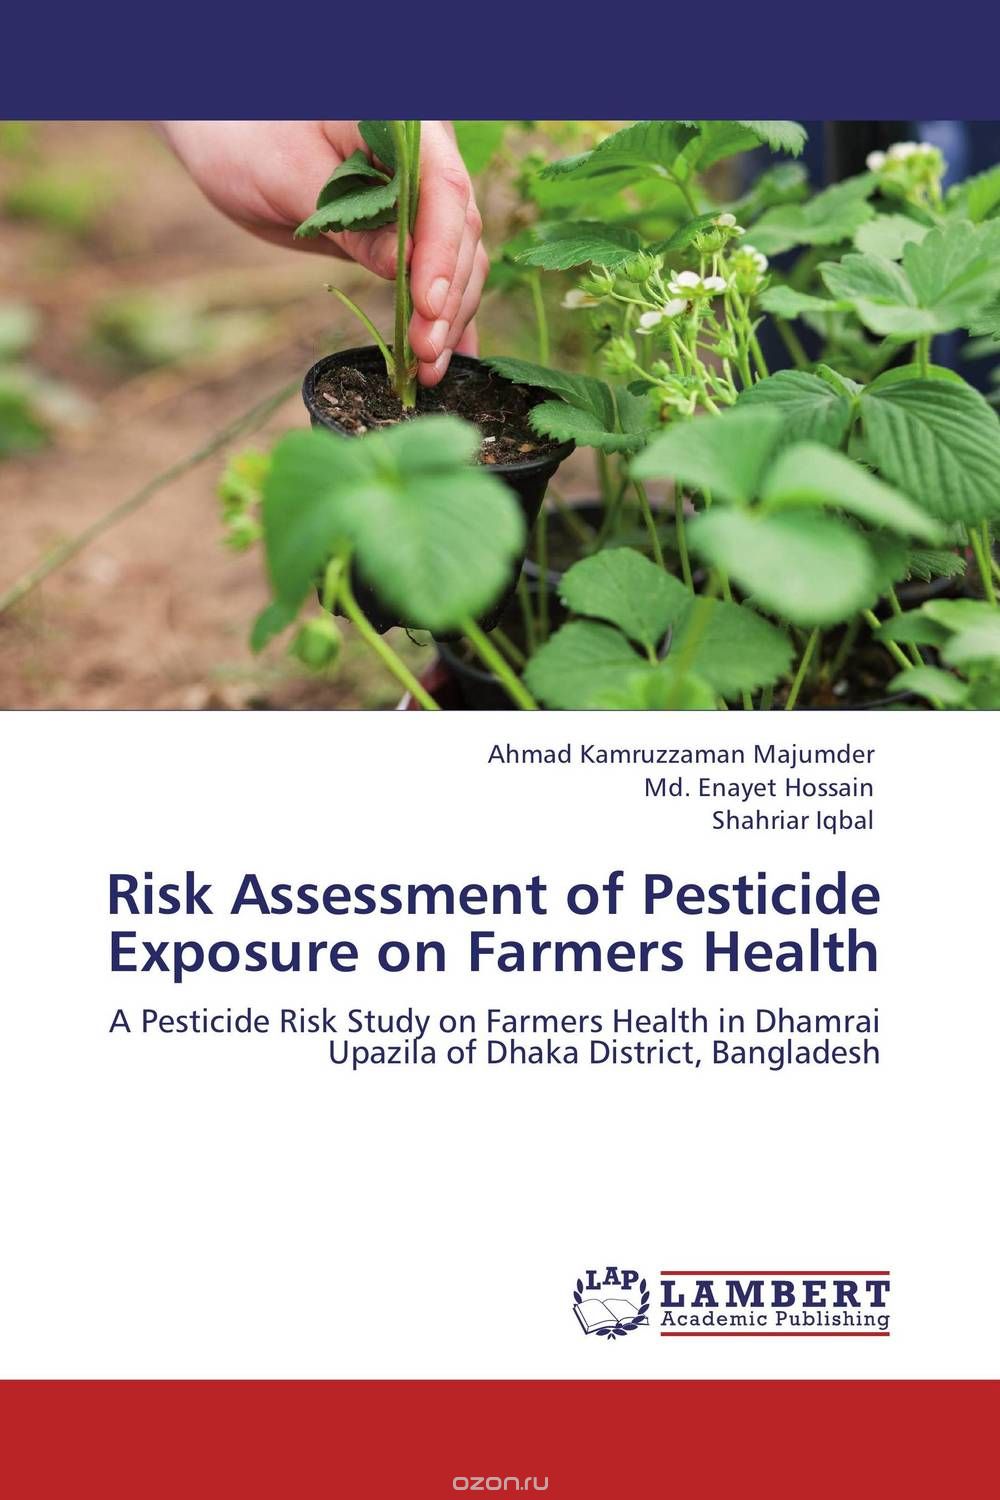 Скачать книгу "Risk Assessment of Pesticide Exposure on Farmers Health"